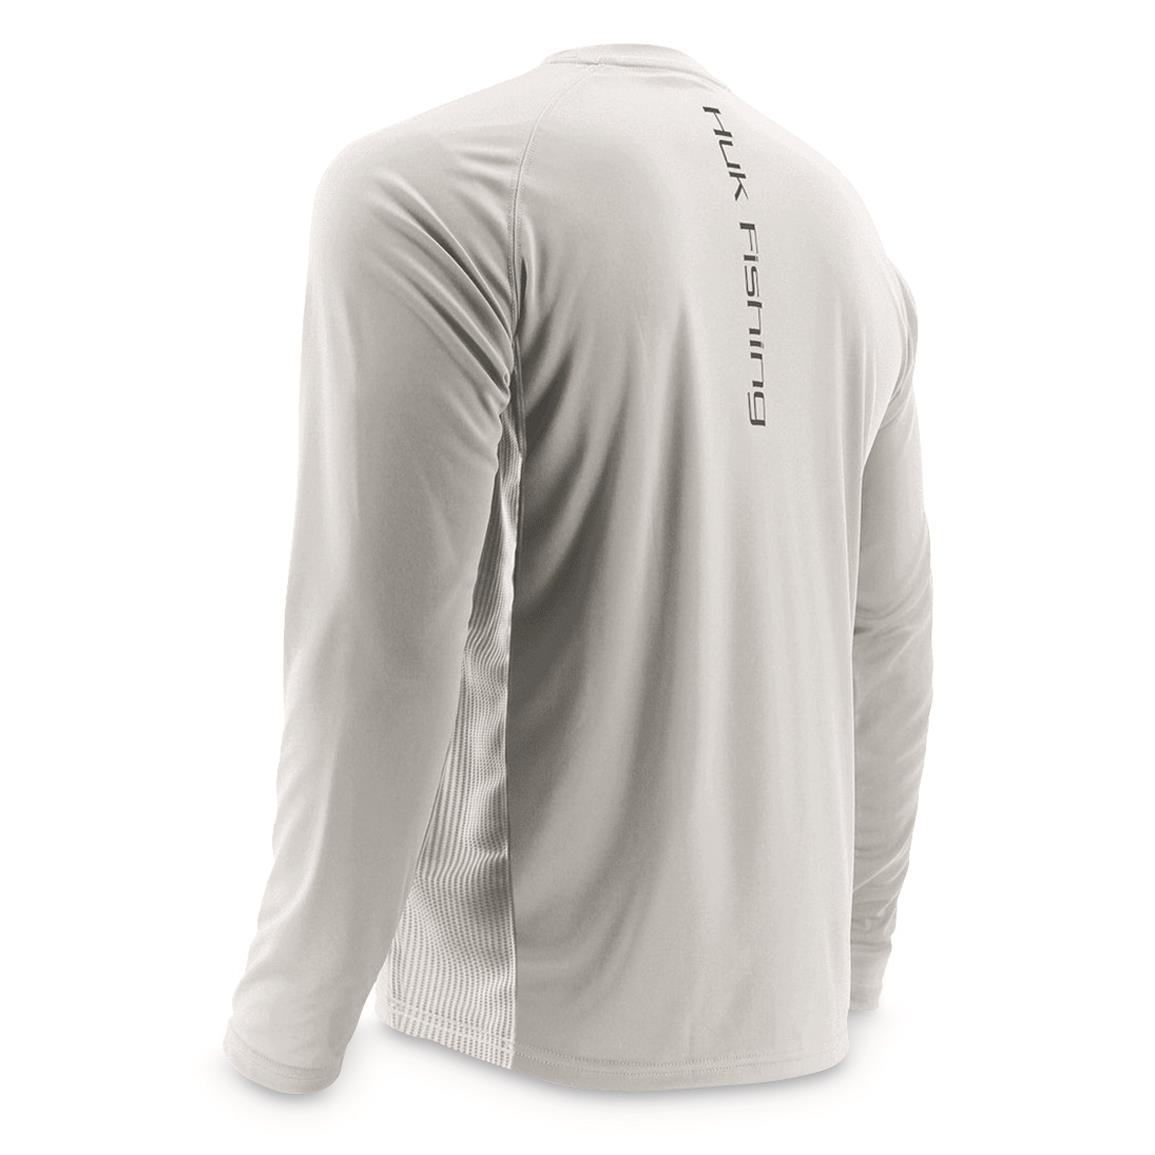 Download Huk Men's Performance Vented Long Sleeve Shirt - 706191, T ...